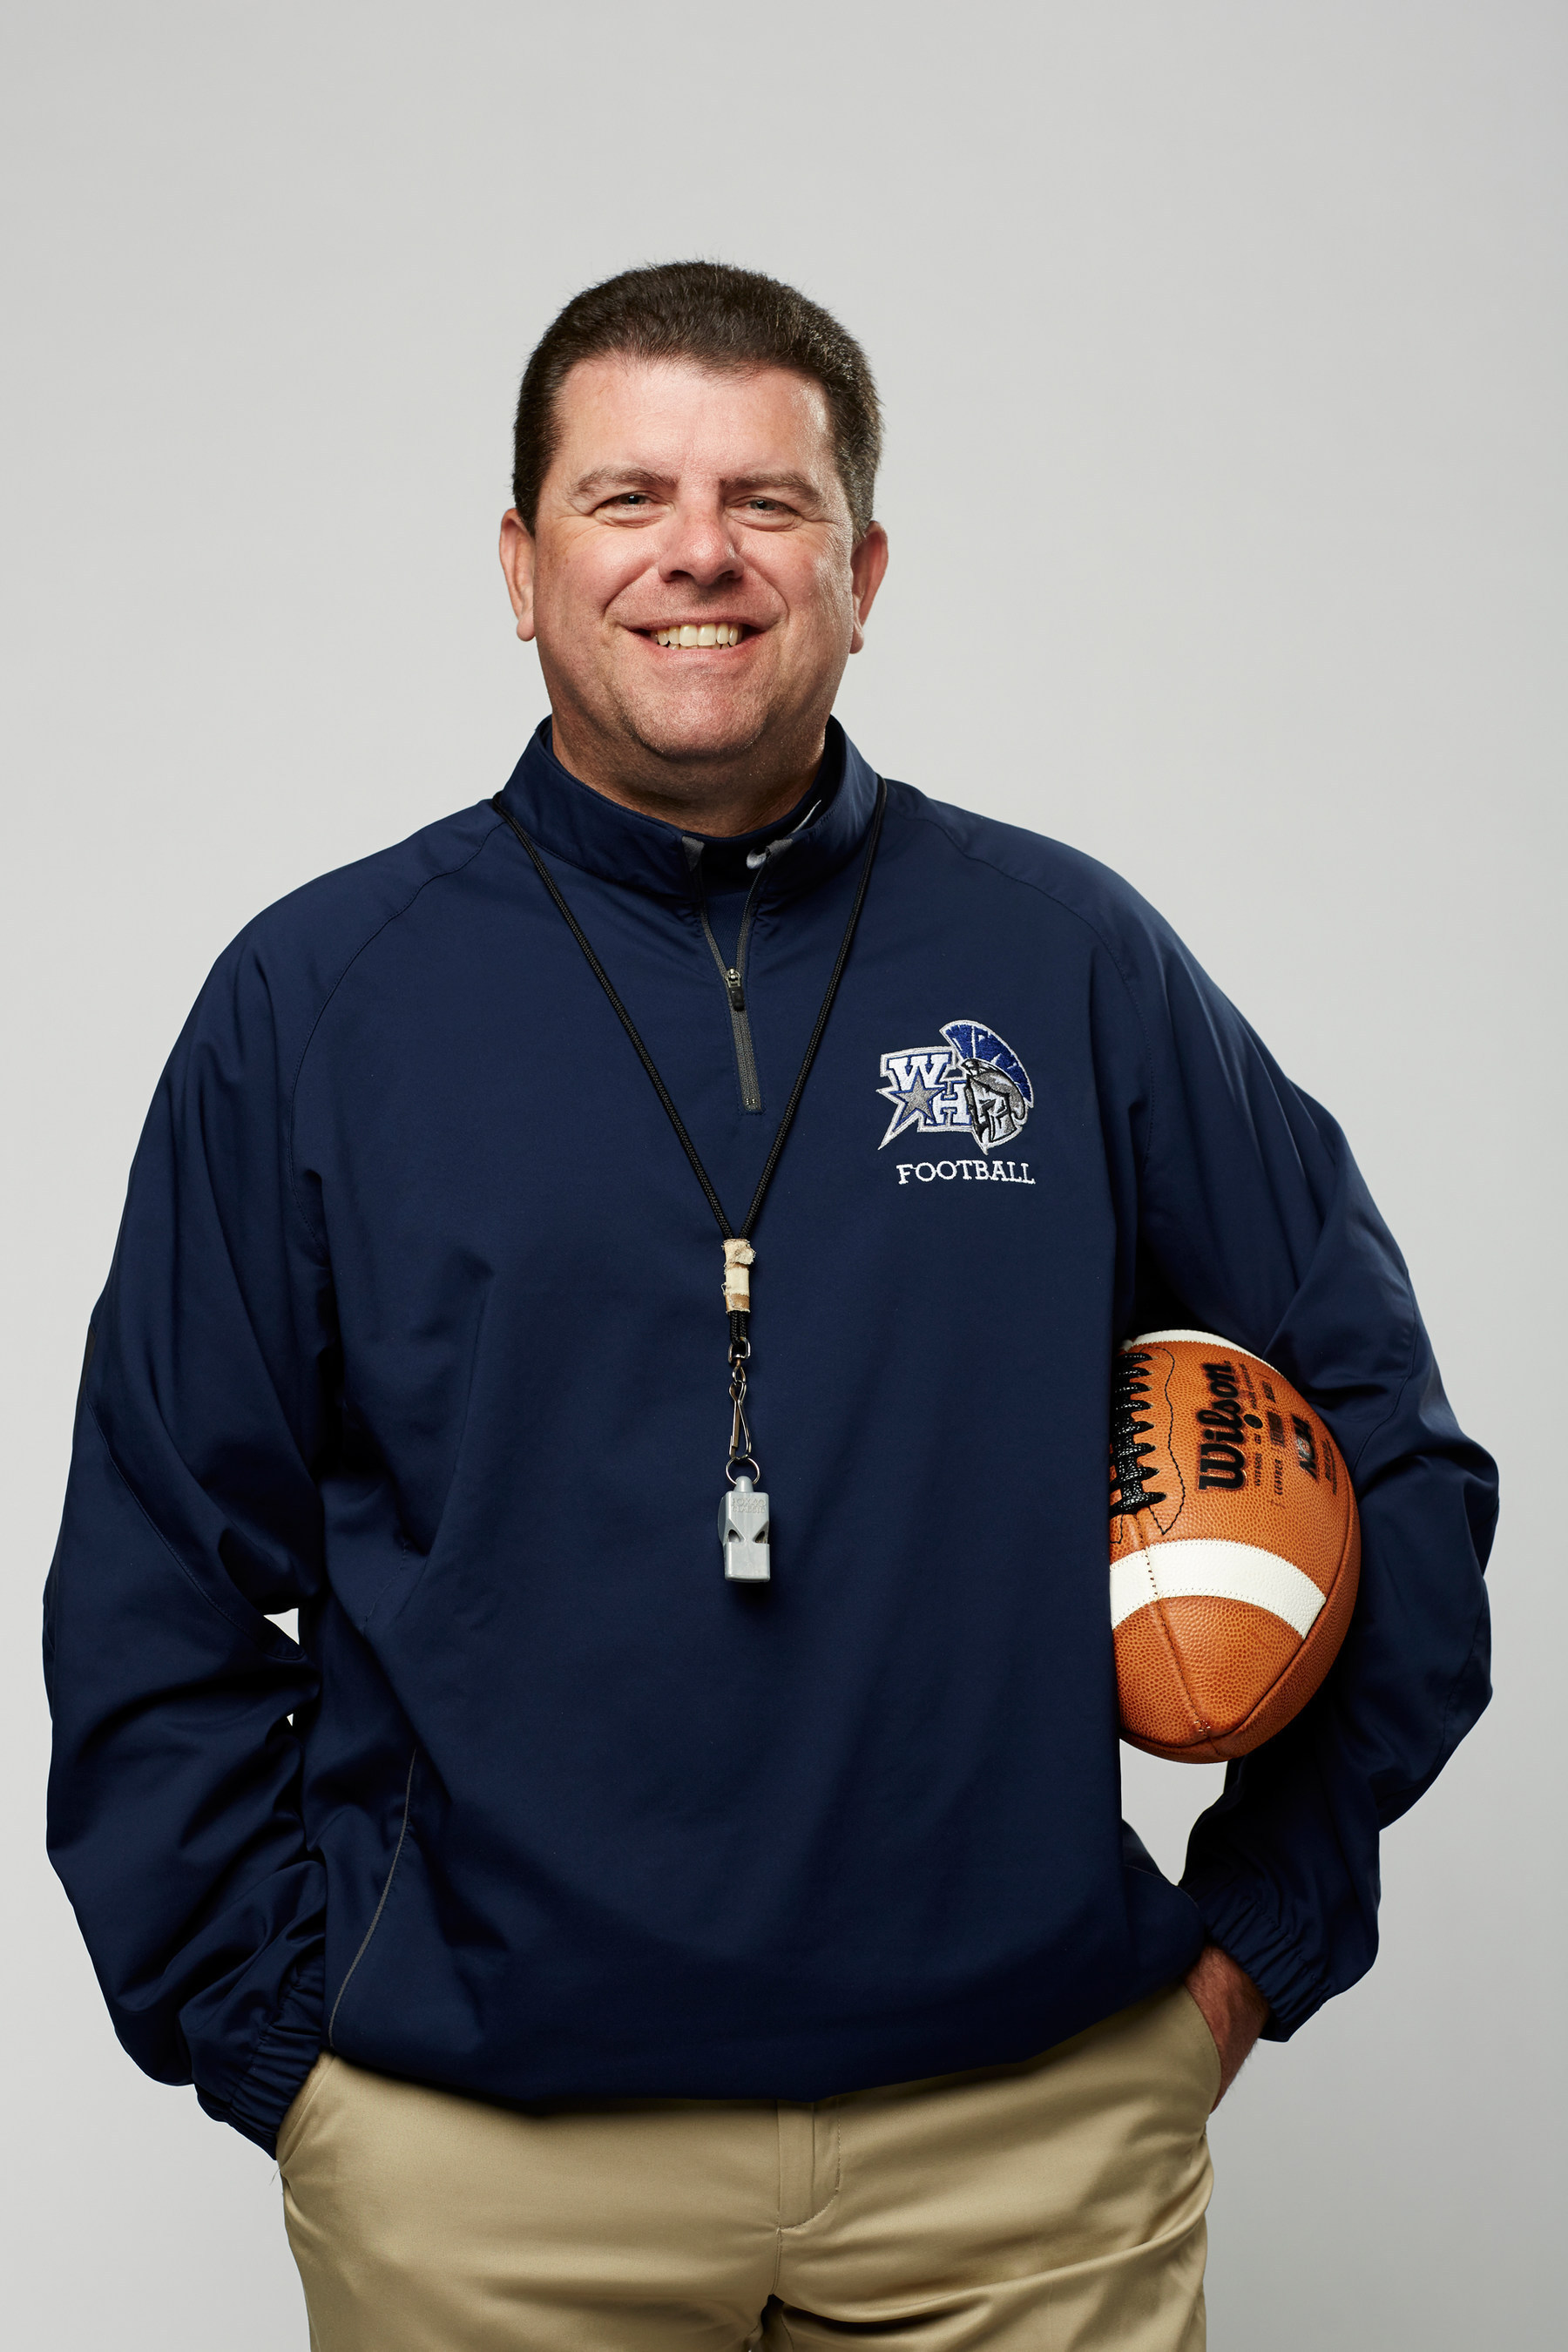 Coach Tony Lotti: Coach at West Hall High School, Oakwood, Georgia